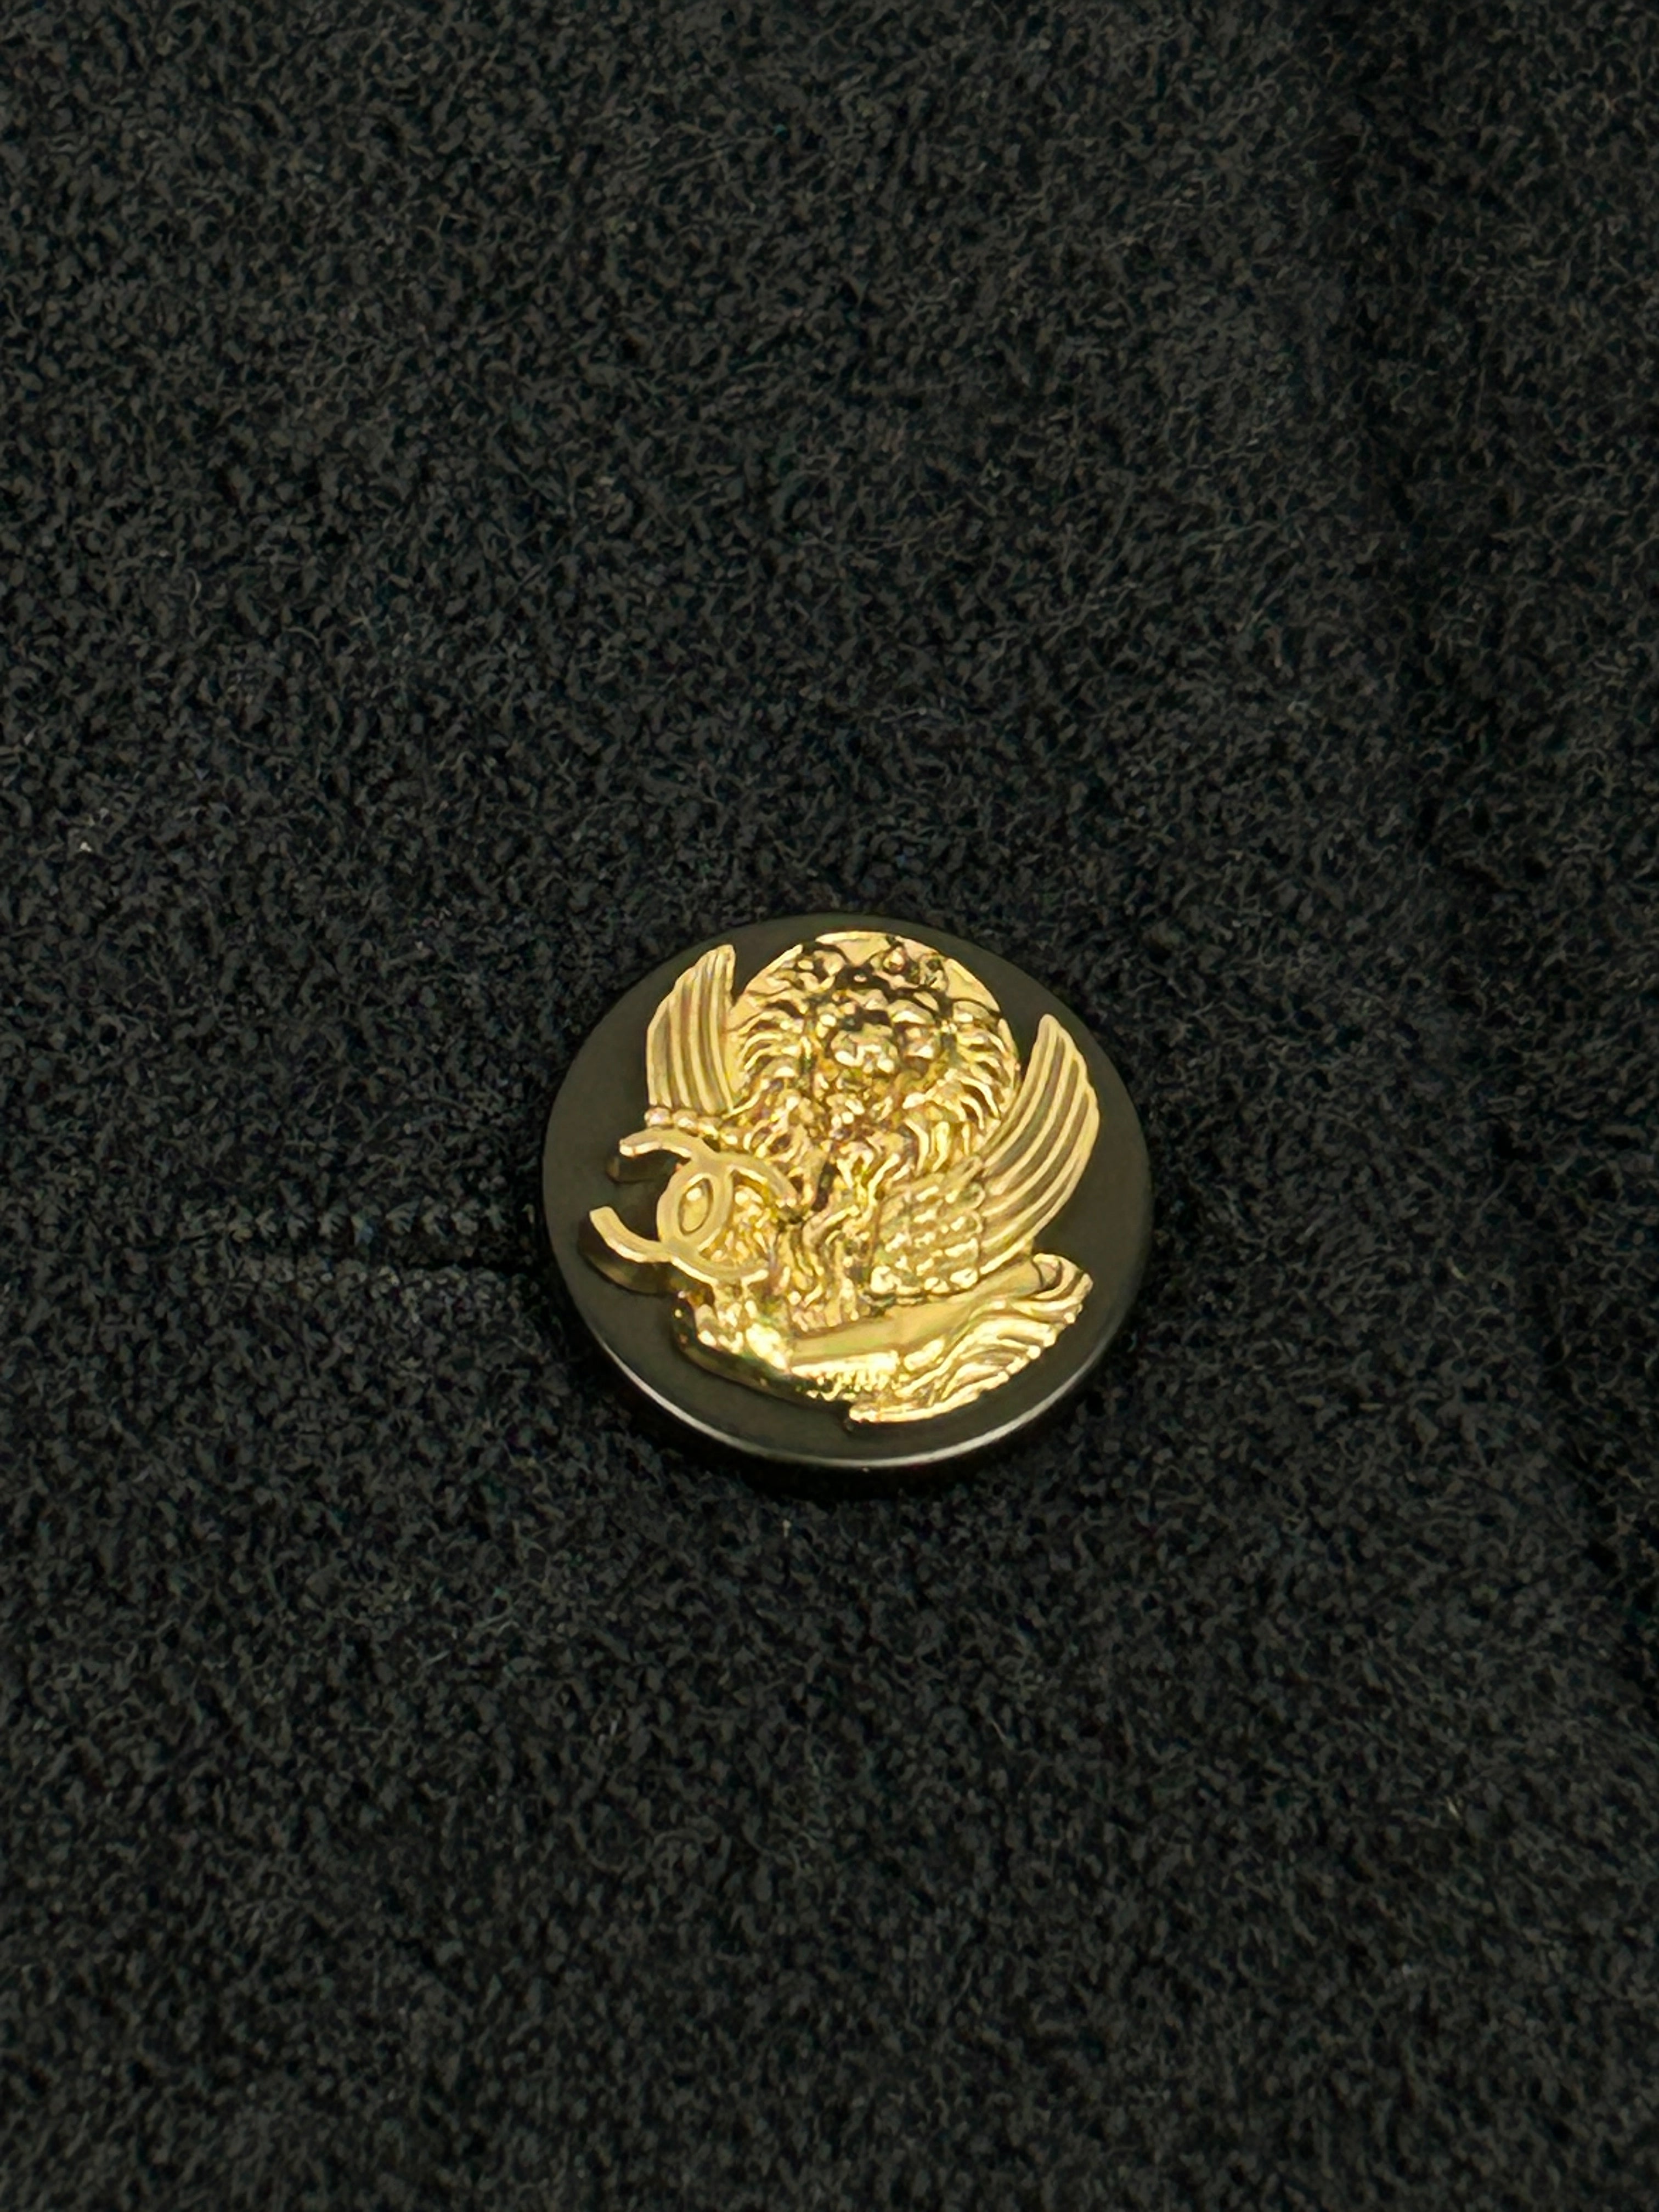 Navy Wool Blazer w/CC Gold Buttons